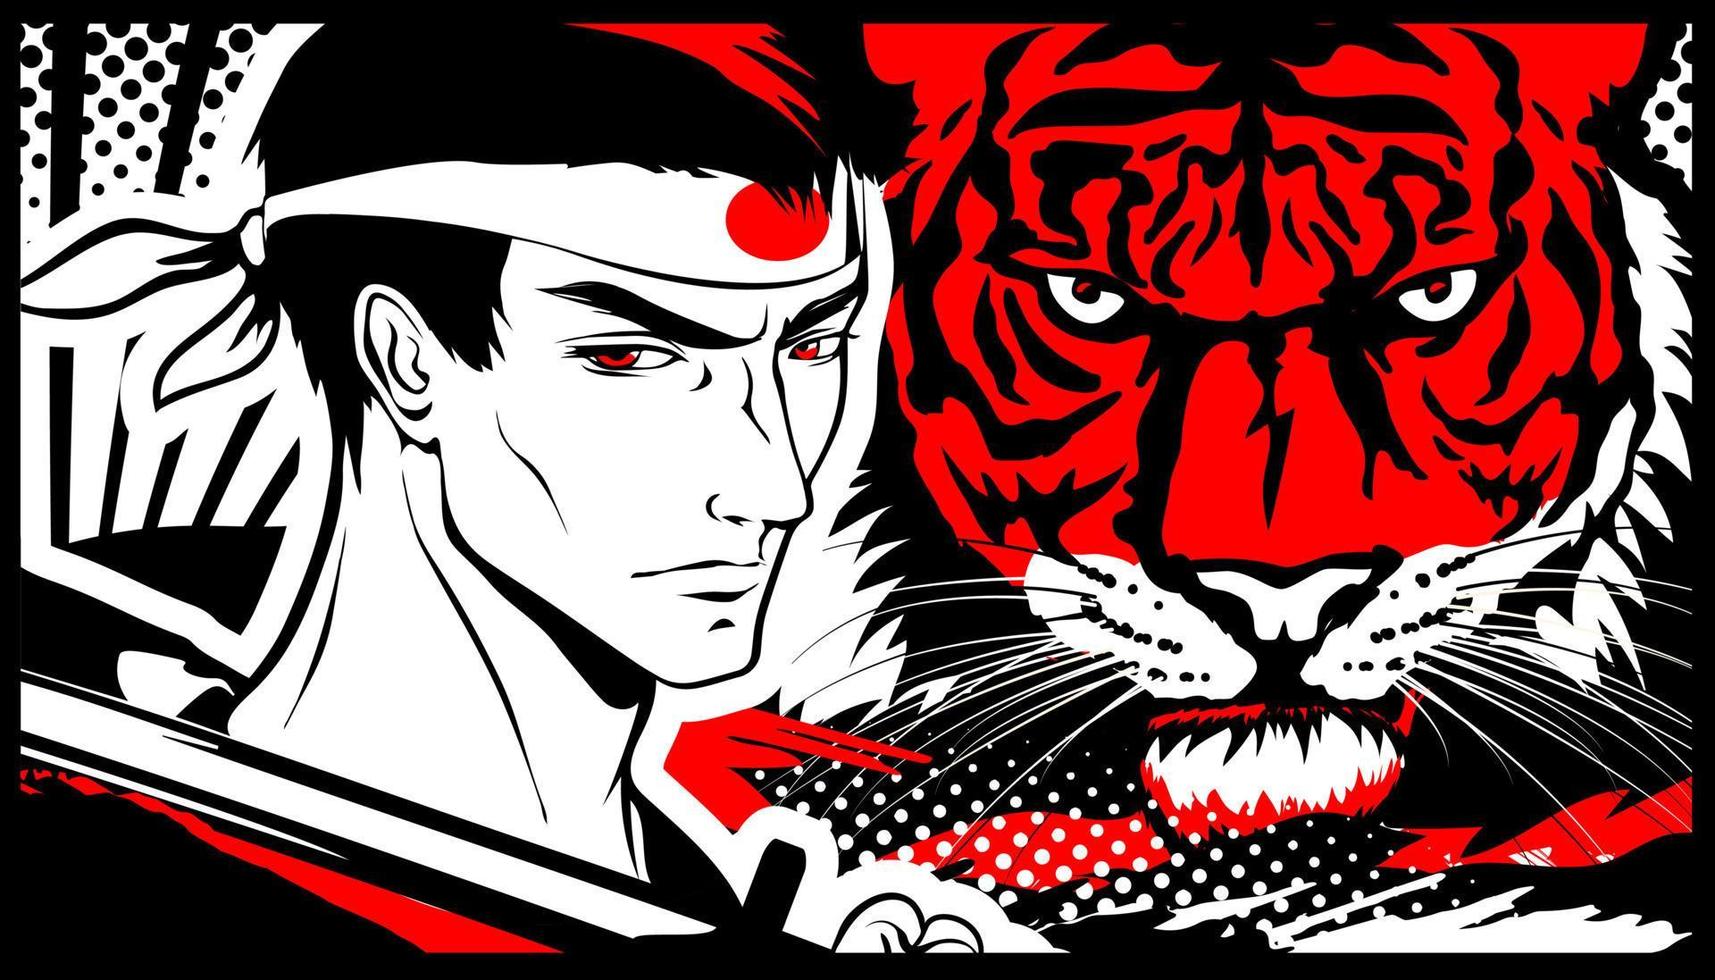 Samurai Mann mit Katana und Tiger im Manga und Anime Stil. vektor